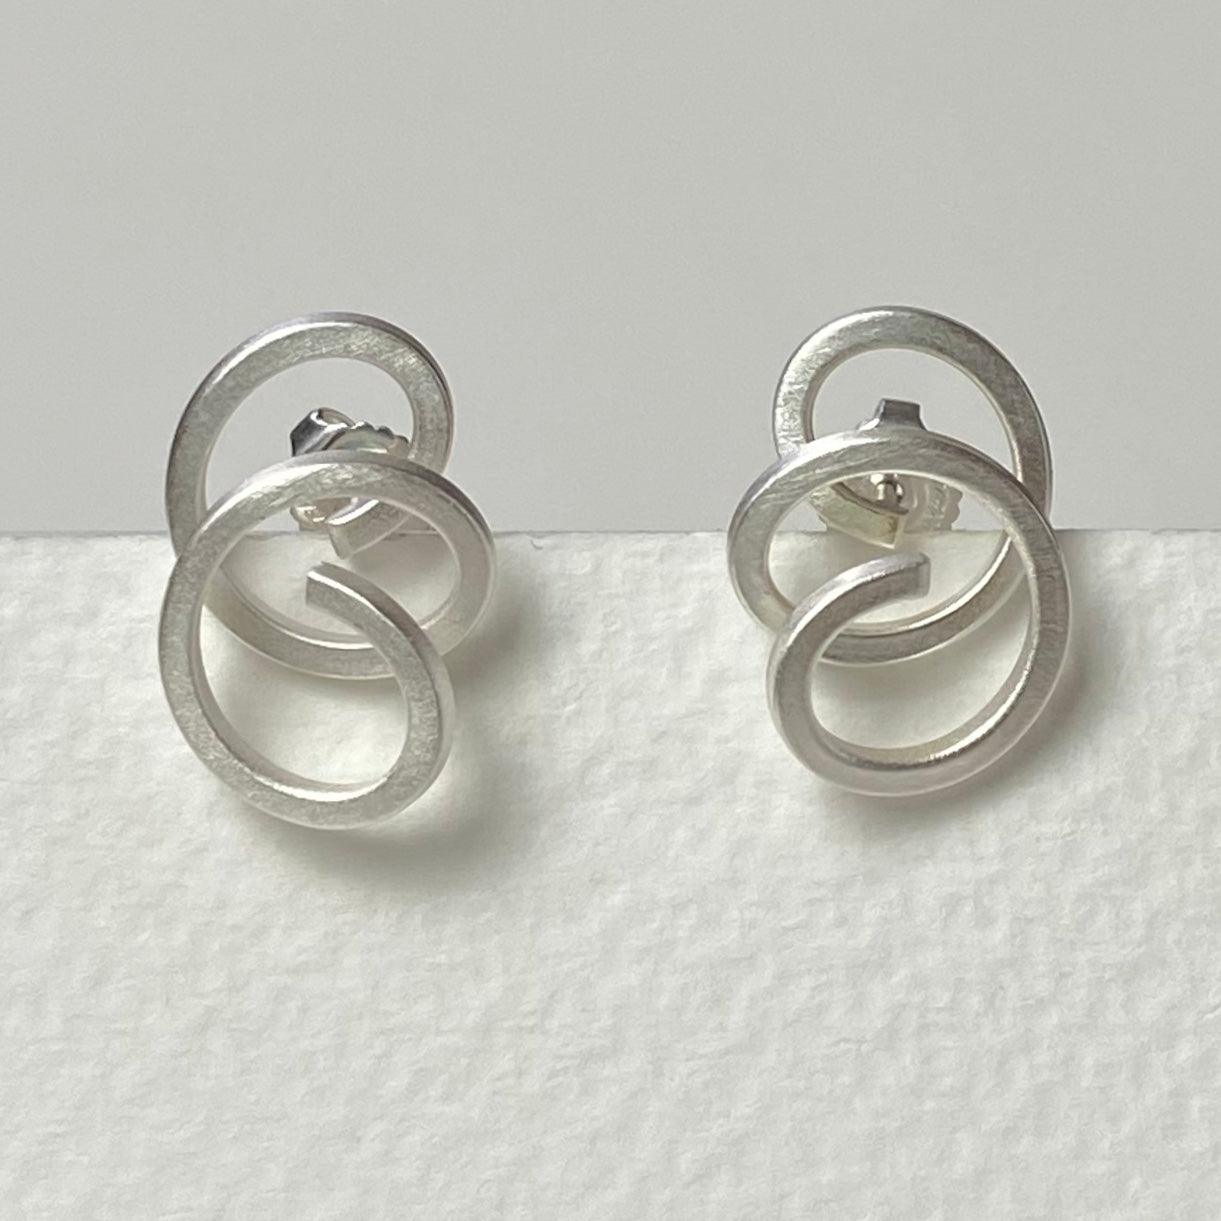 Satin Finish Silver Earrings - The Nancy Smillie Shop - Art, Jewellery & Designer Gifts Glasgow